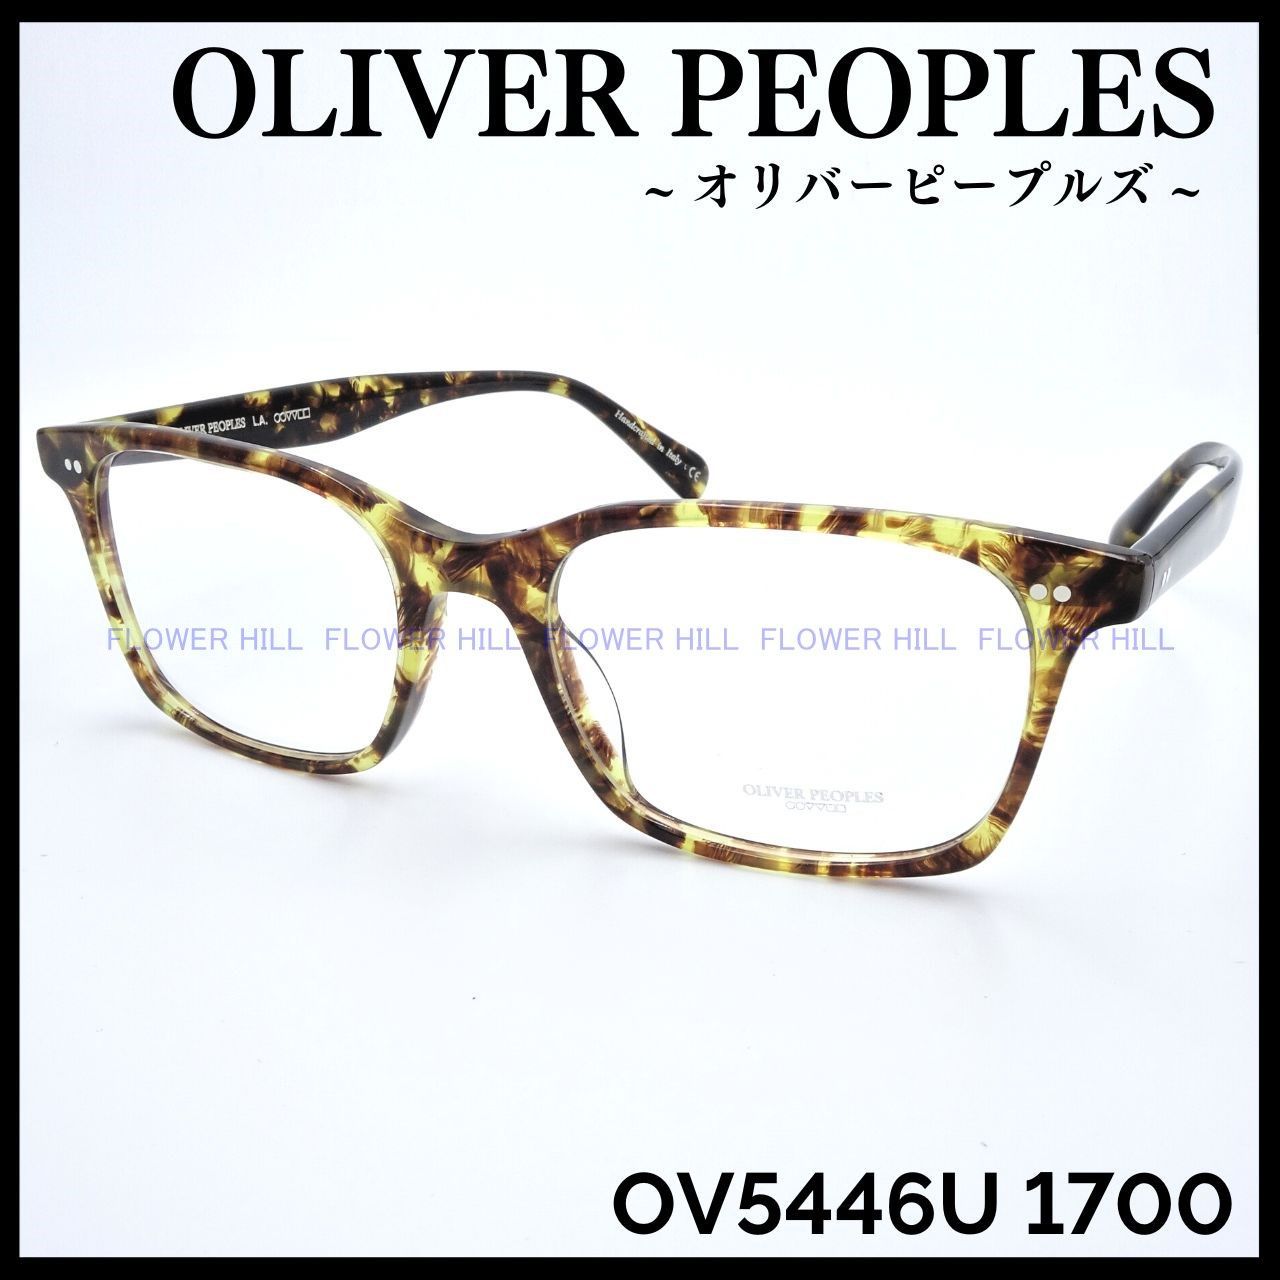 OLIVER PEOPLES オリバーピープルズ メガネ フレーム OV5446U 1700 ハバナ ウェリントン イタリア製 メンズ レディース